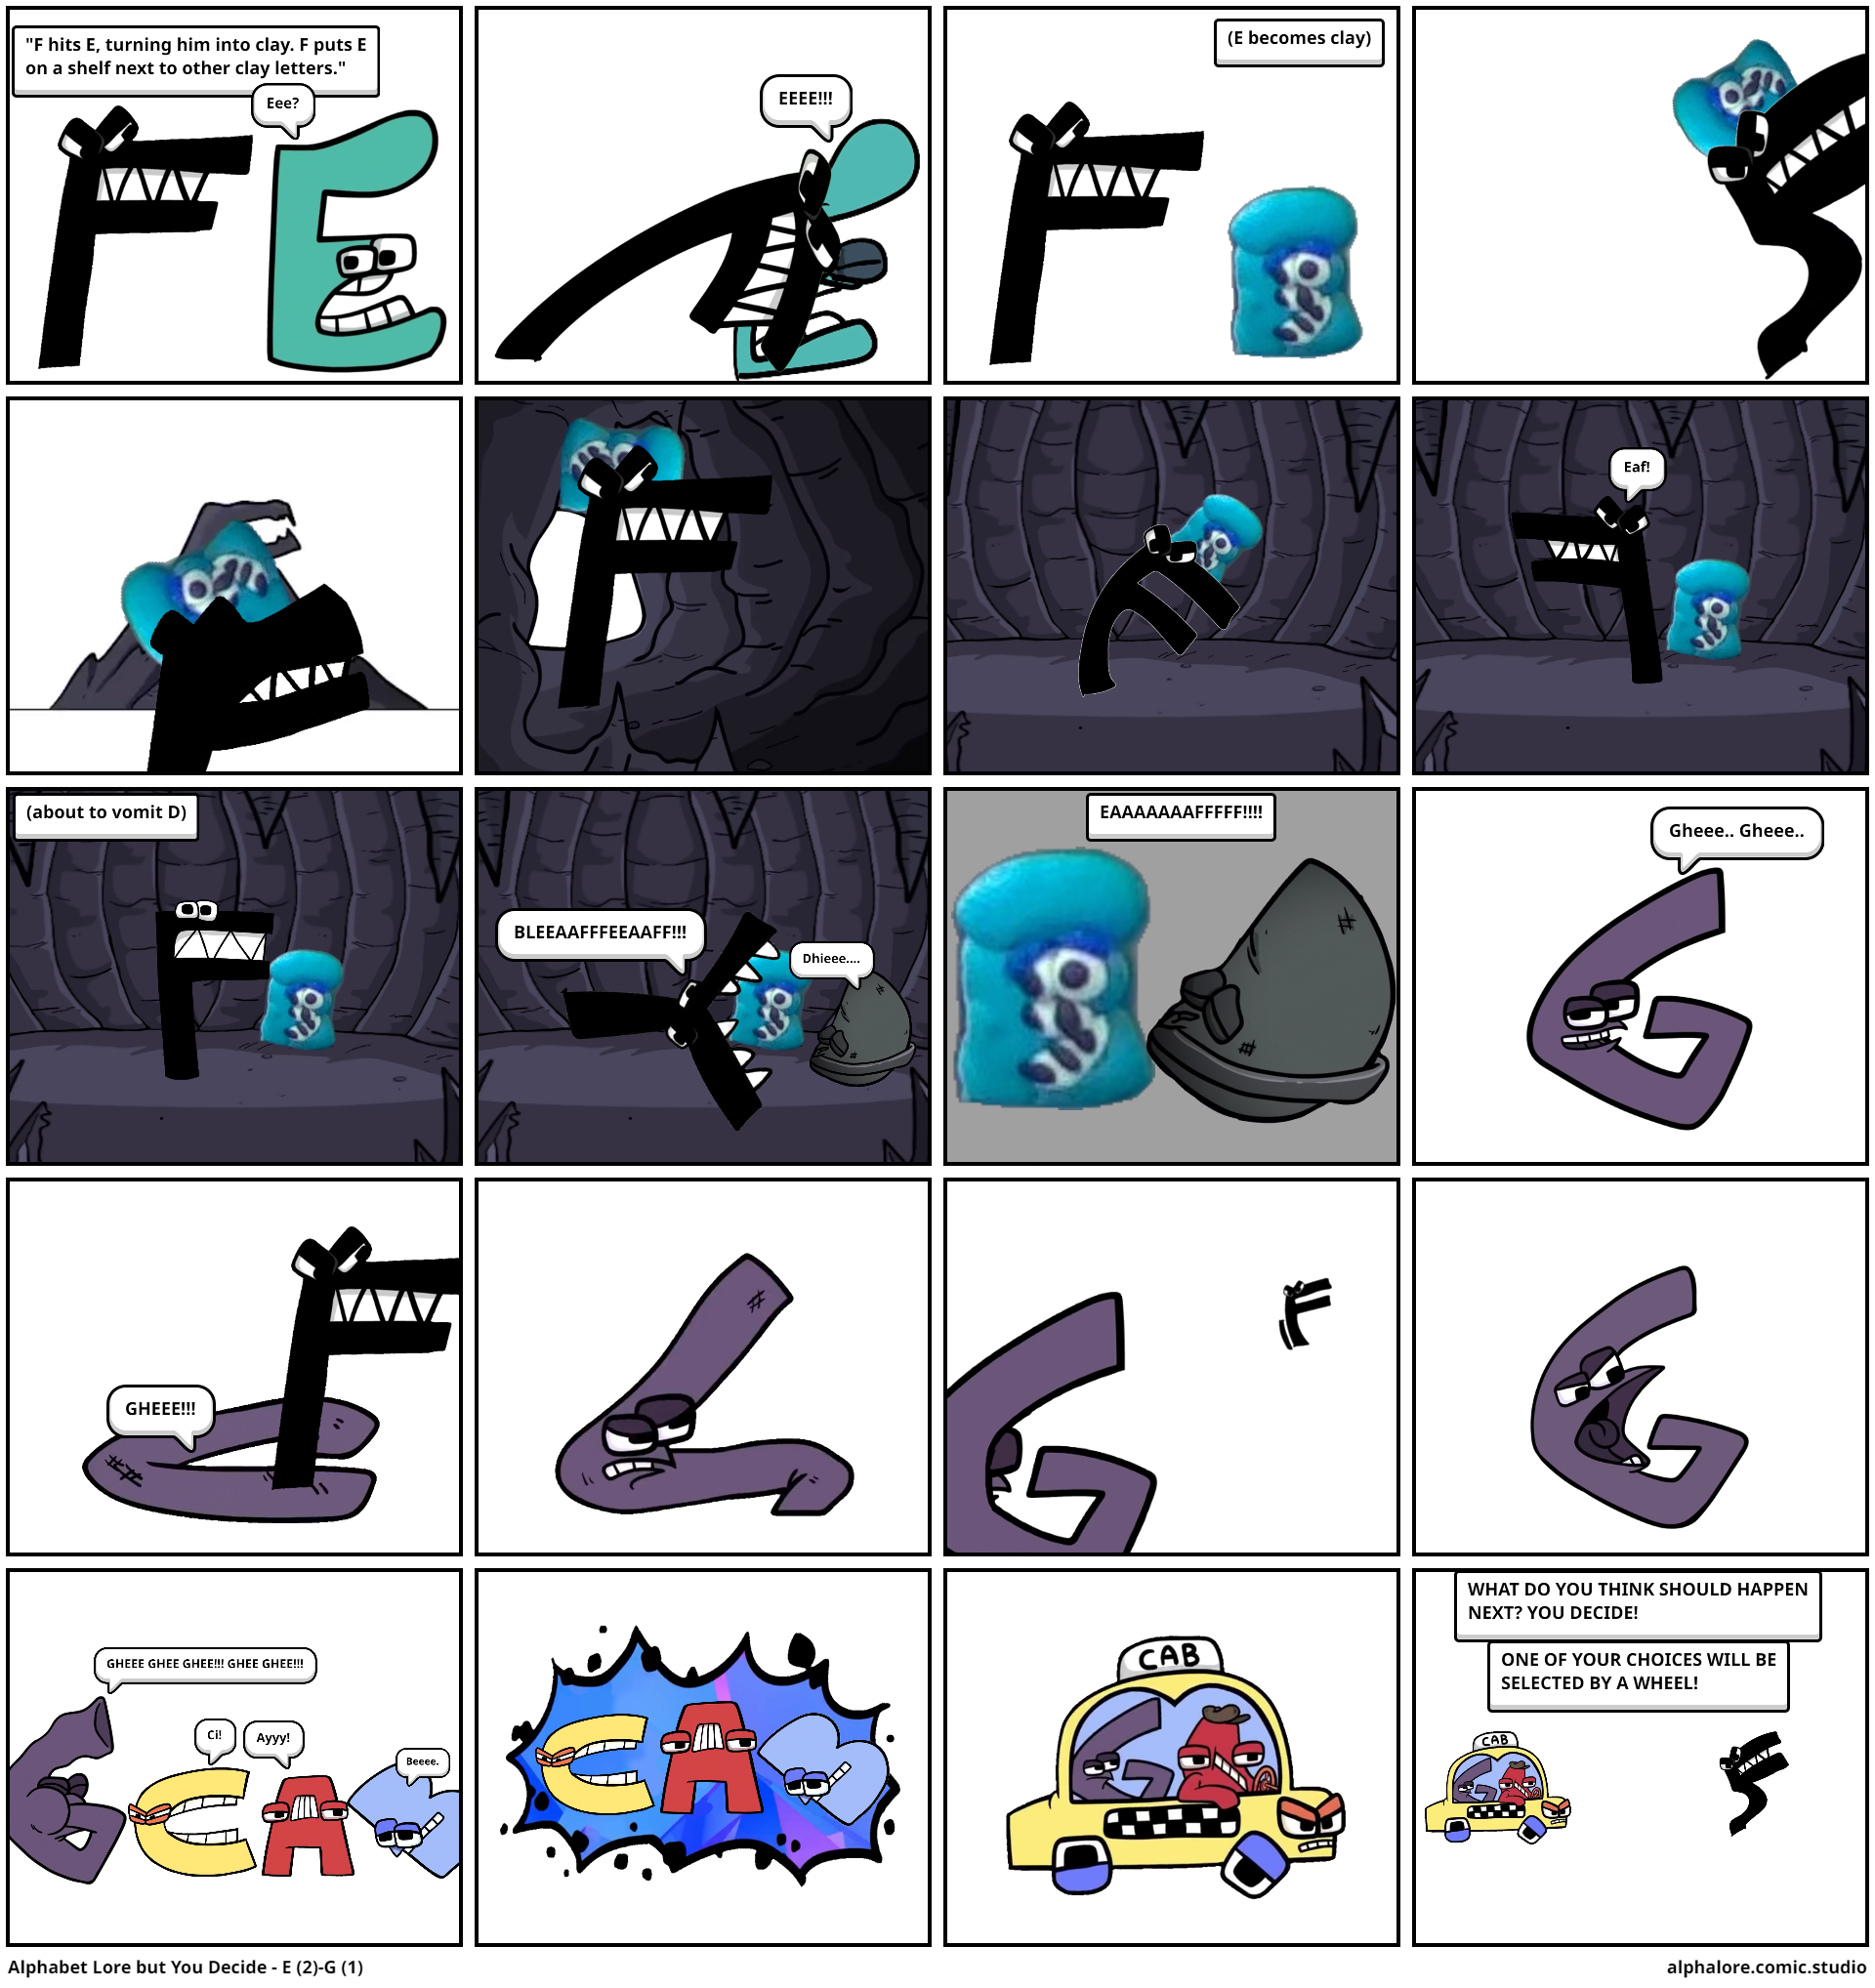 Number lore but is alphabet lore - Comic Studio